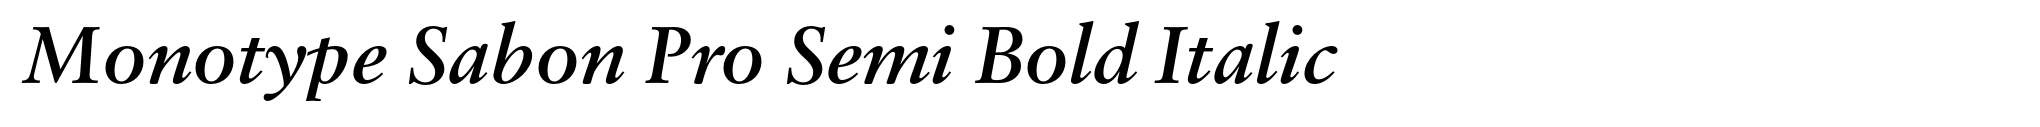 Monotype Sabon Pro Semi Bold Italic image